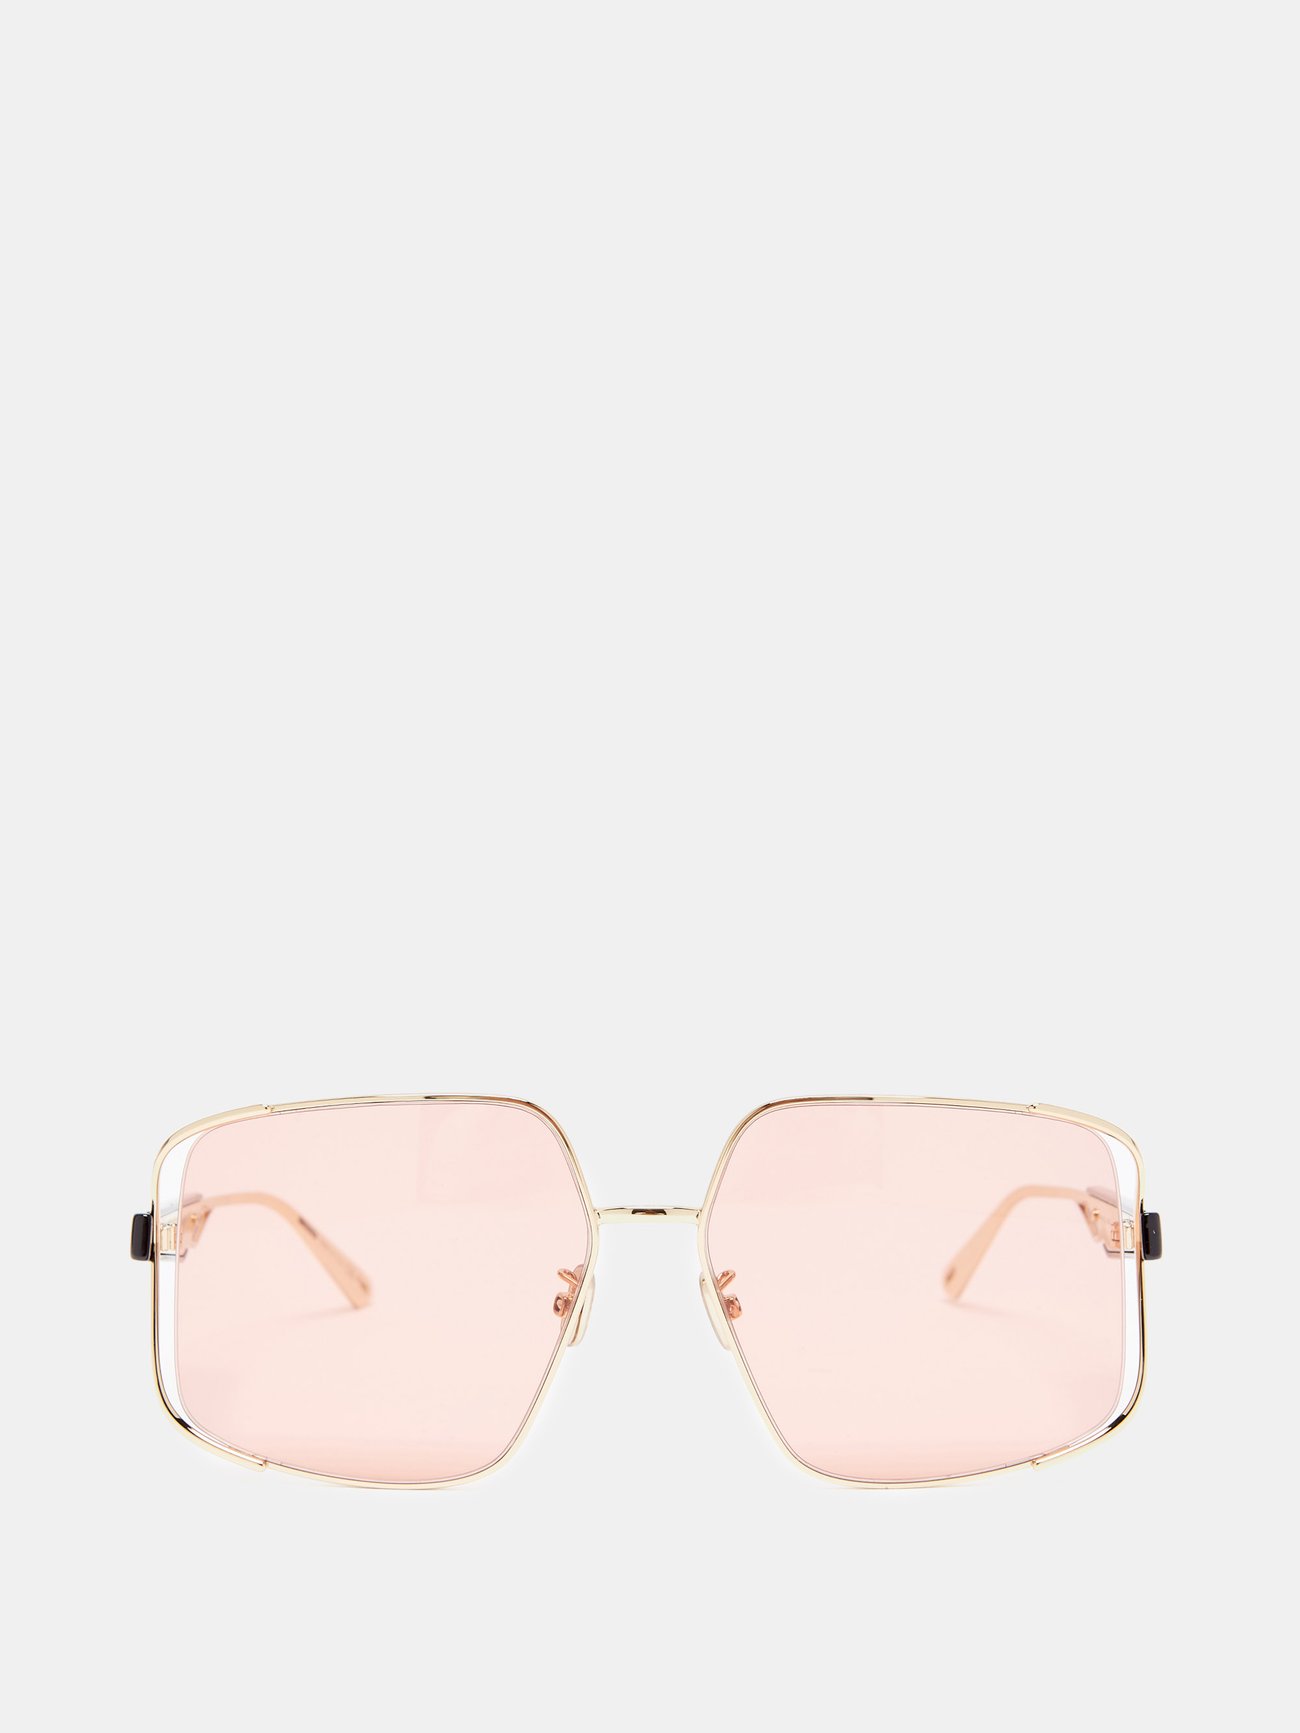 MATCHESFASHION Women Accessories Sunglasses Square Sunglasses Archi Square Metal Sunglasses Womens Pink Gold 